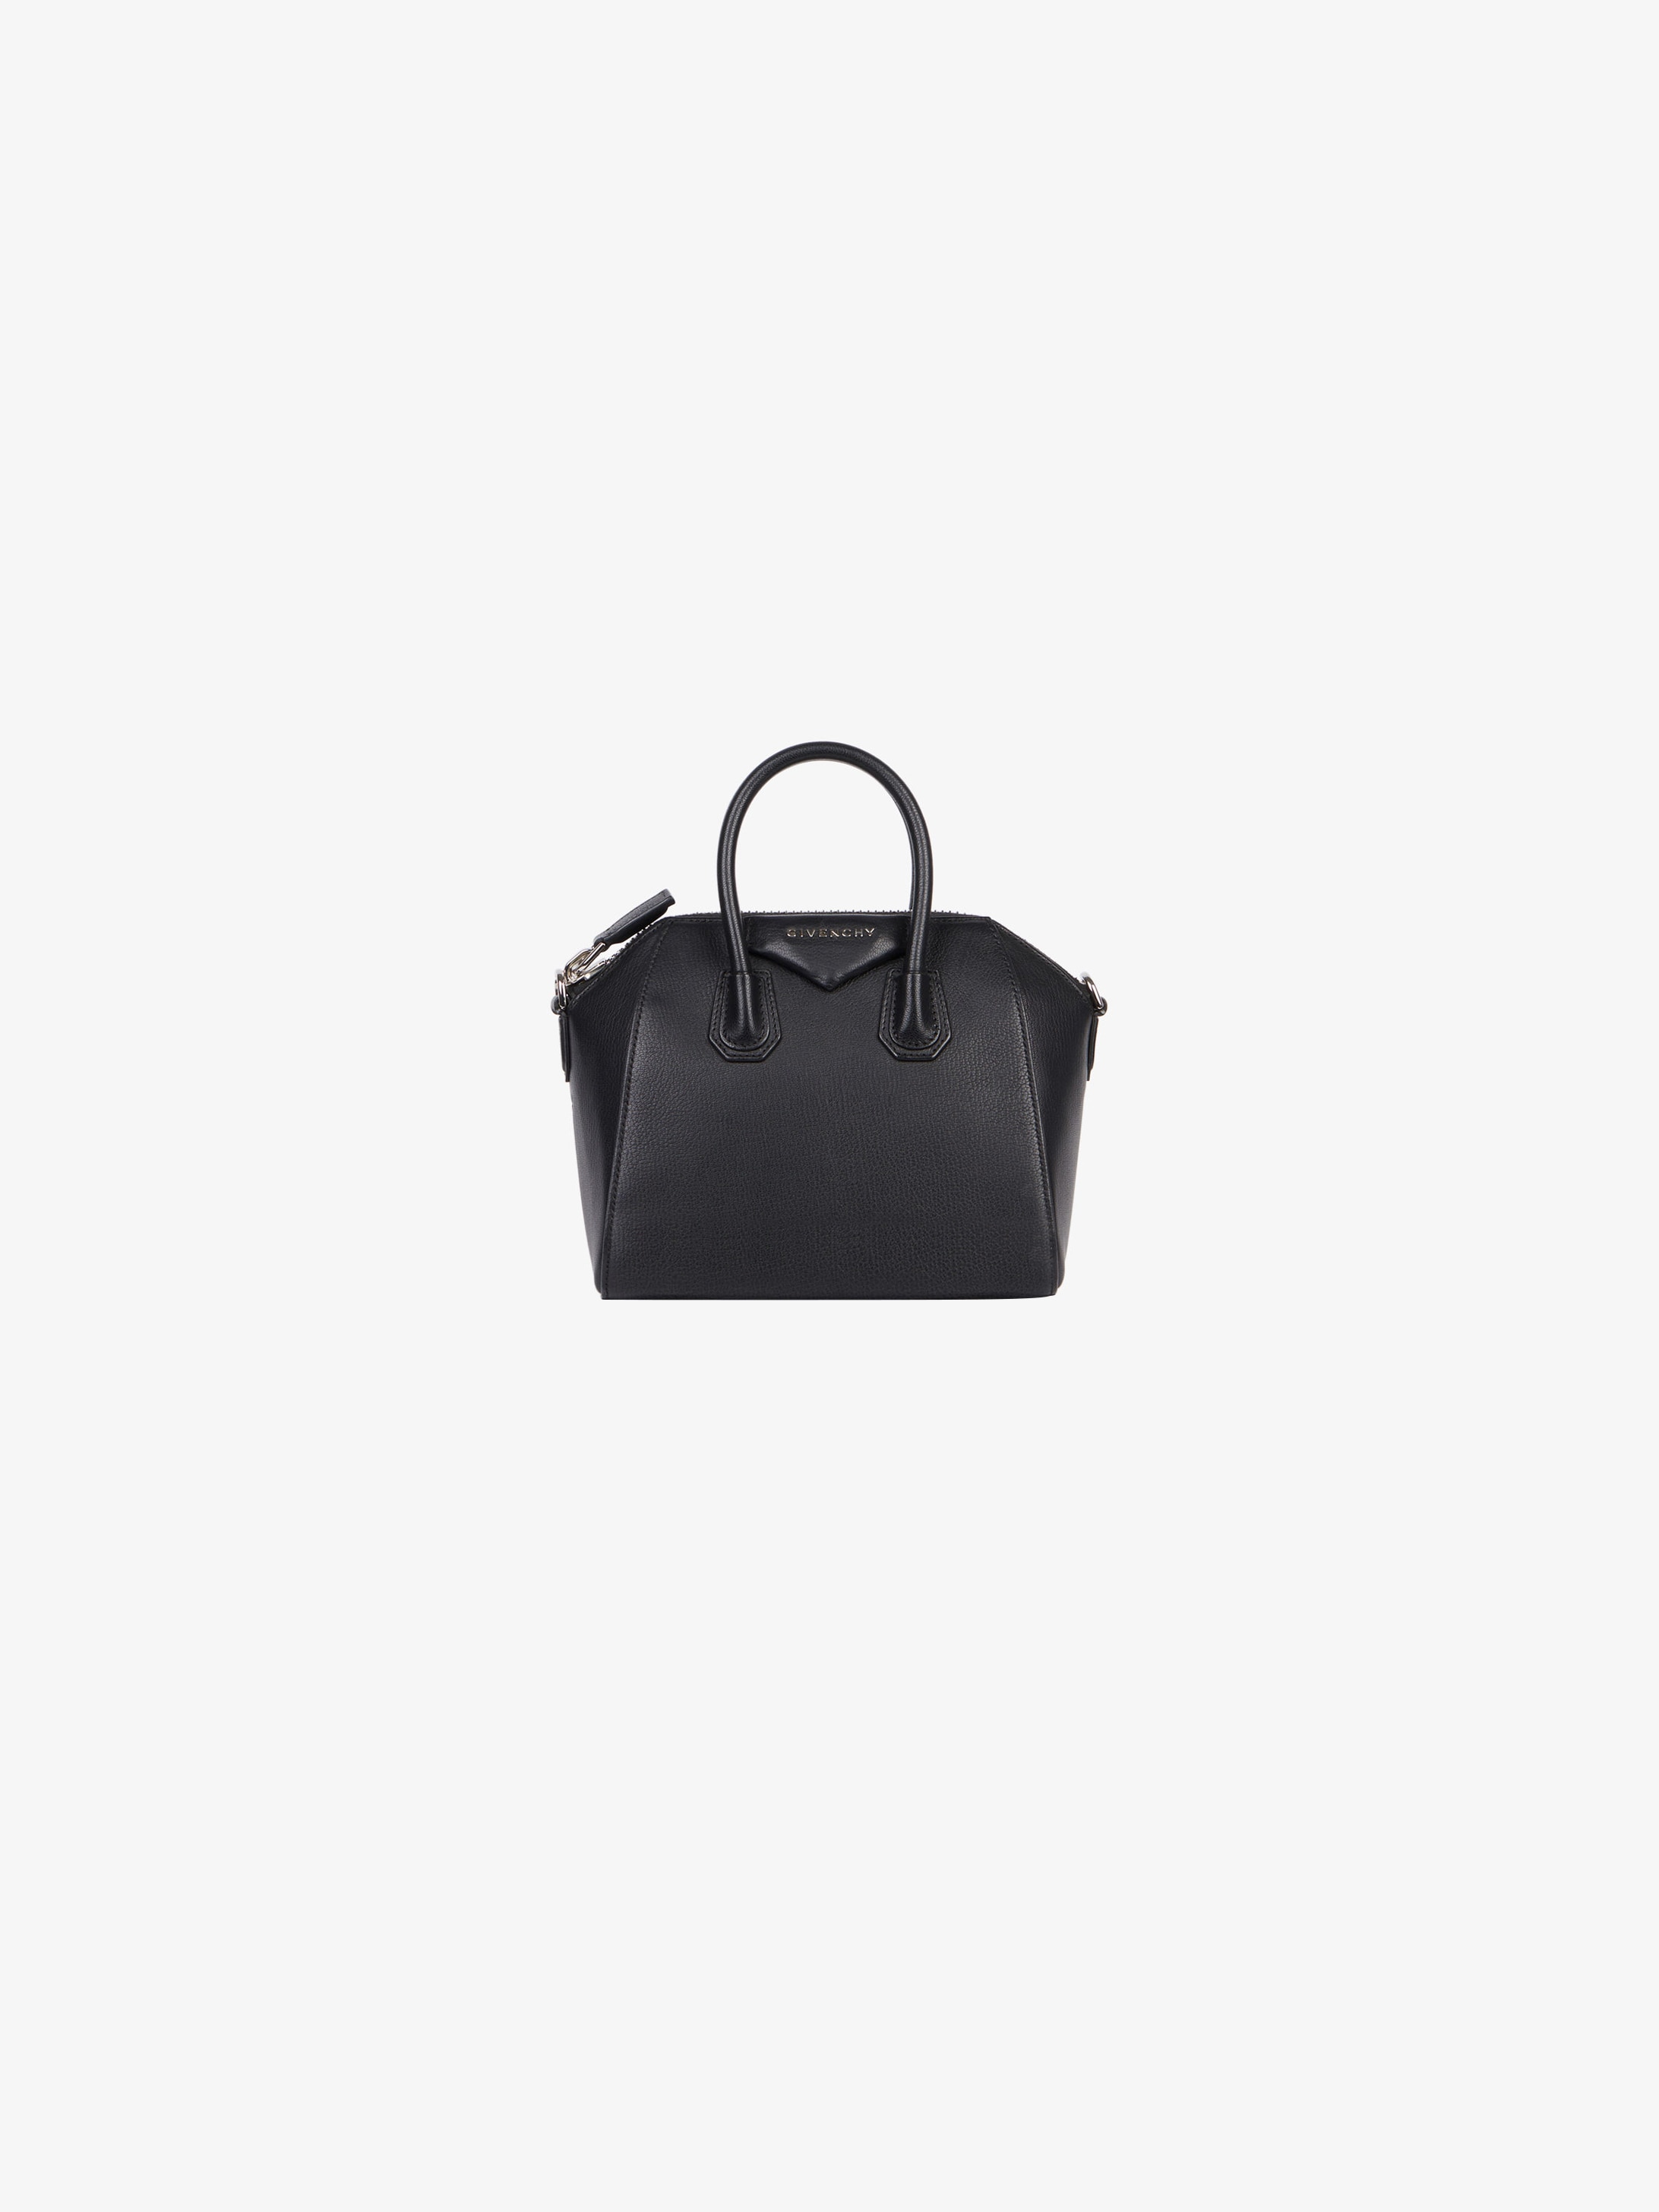 Givenchy Mini Antigona bag | GIVENCHY Paris